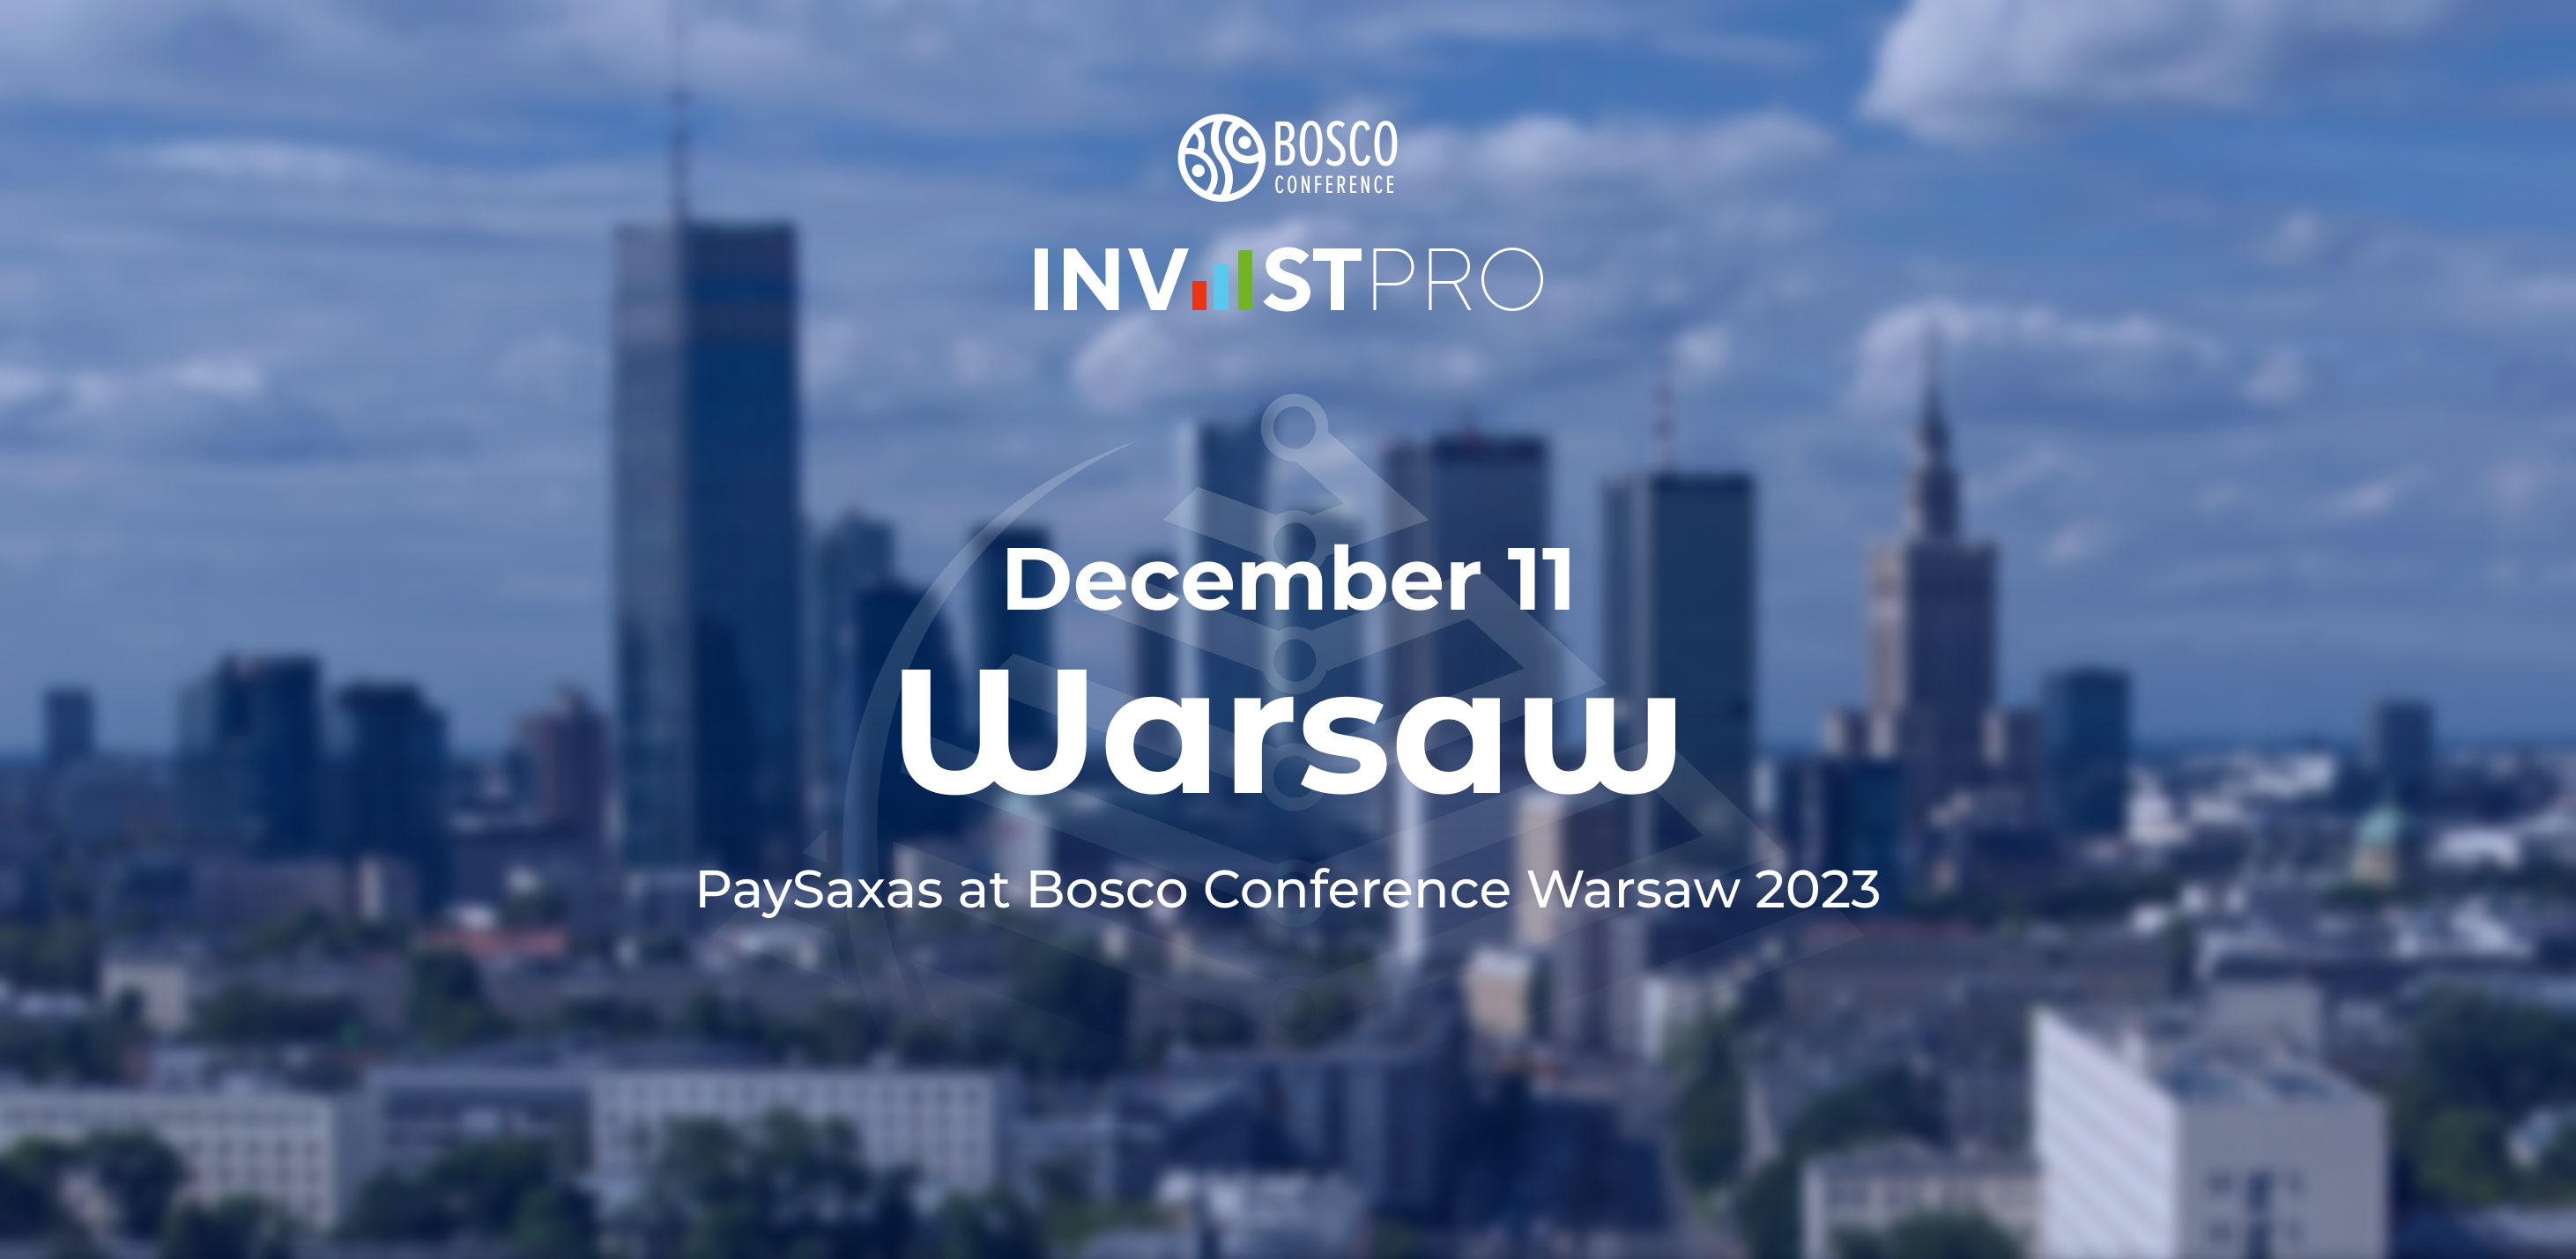 PaySaxas at Bosco Conference Warsaw 2023!